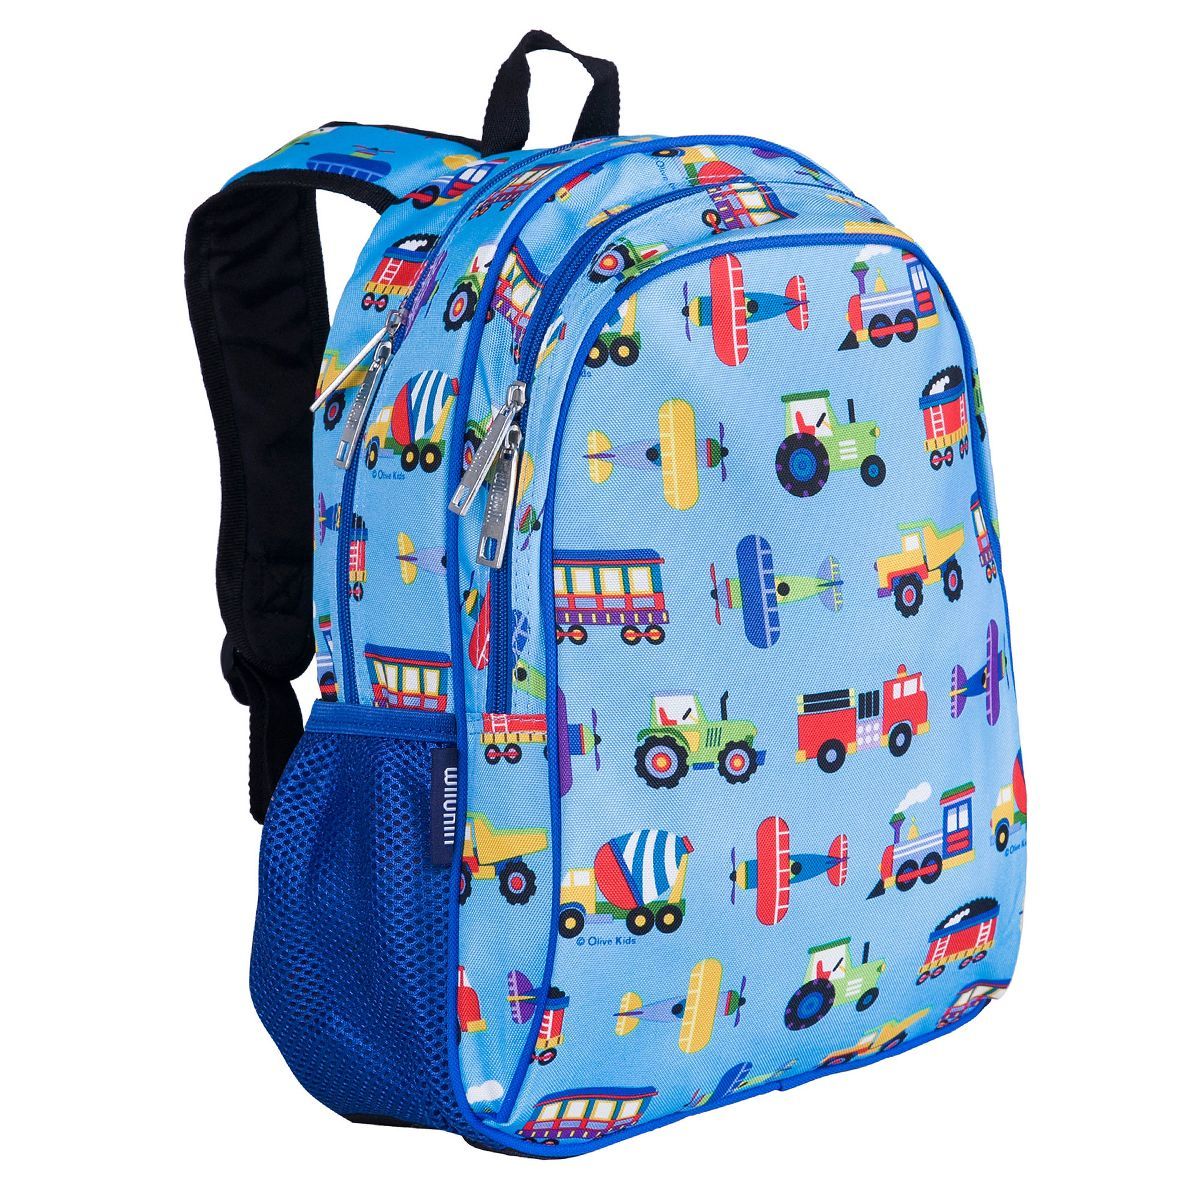 Wildkin 15 Inch Backpack for Kids | Target